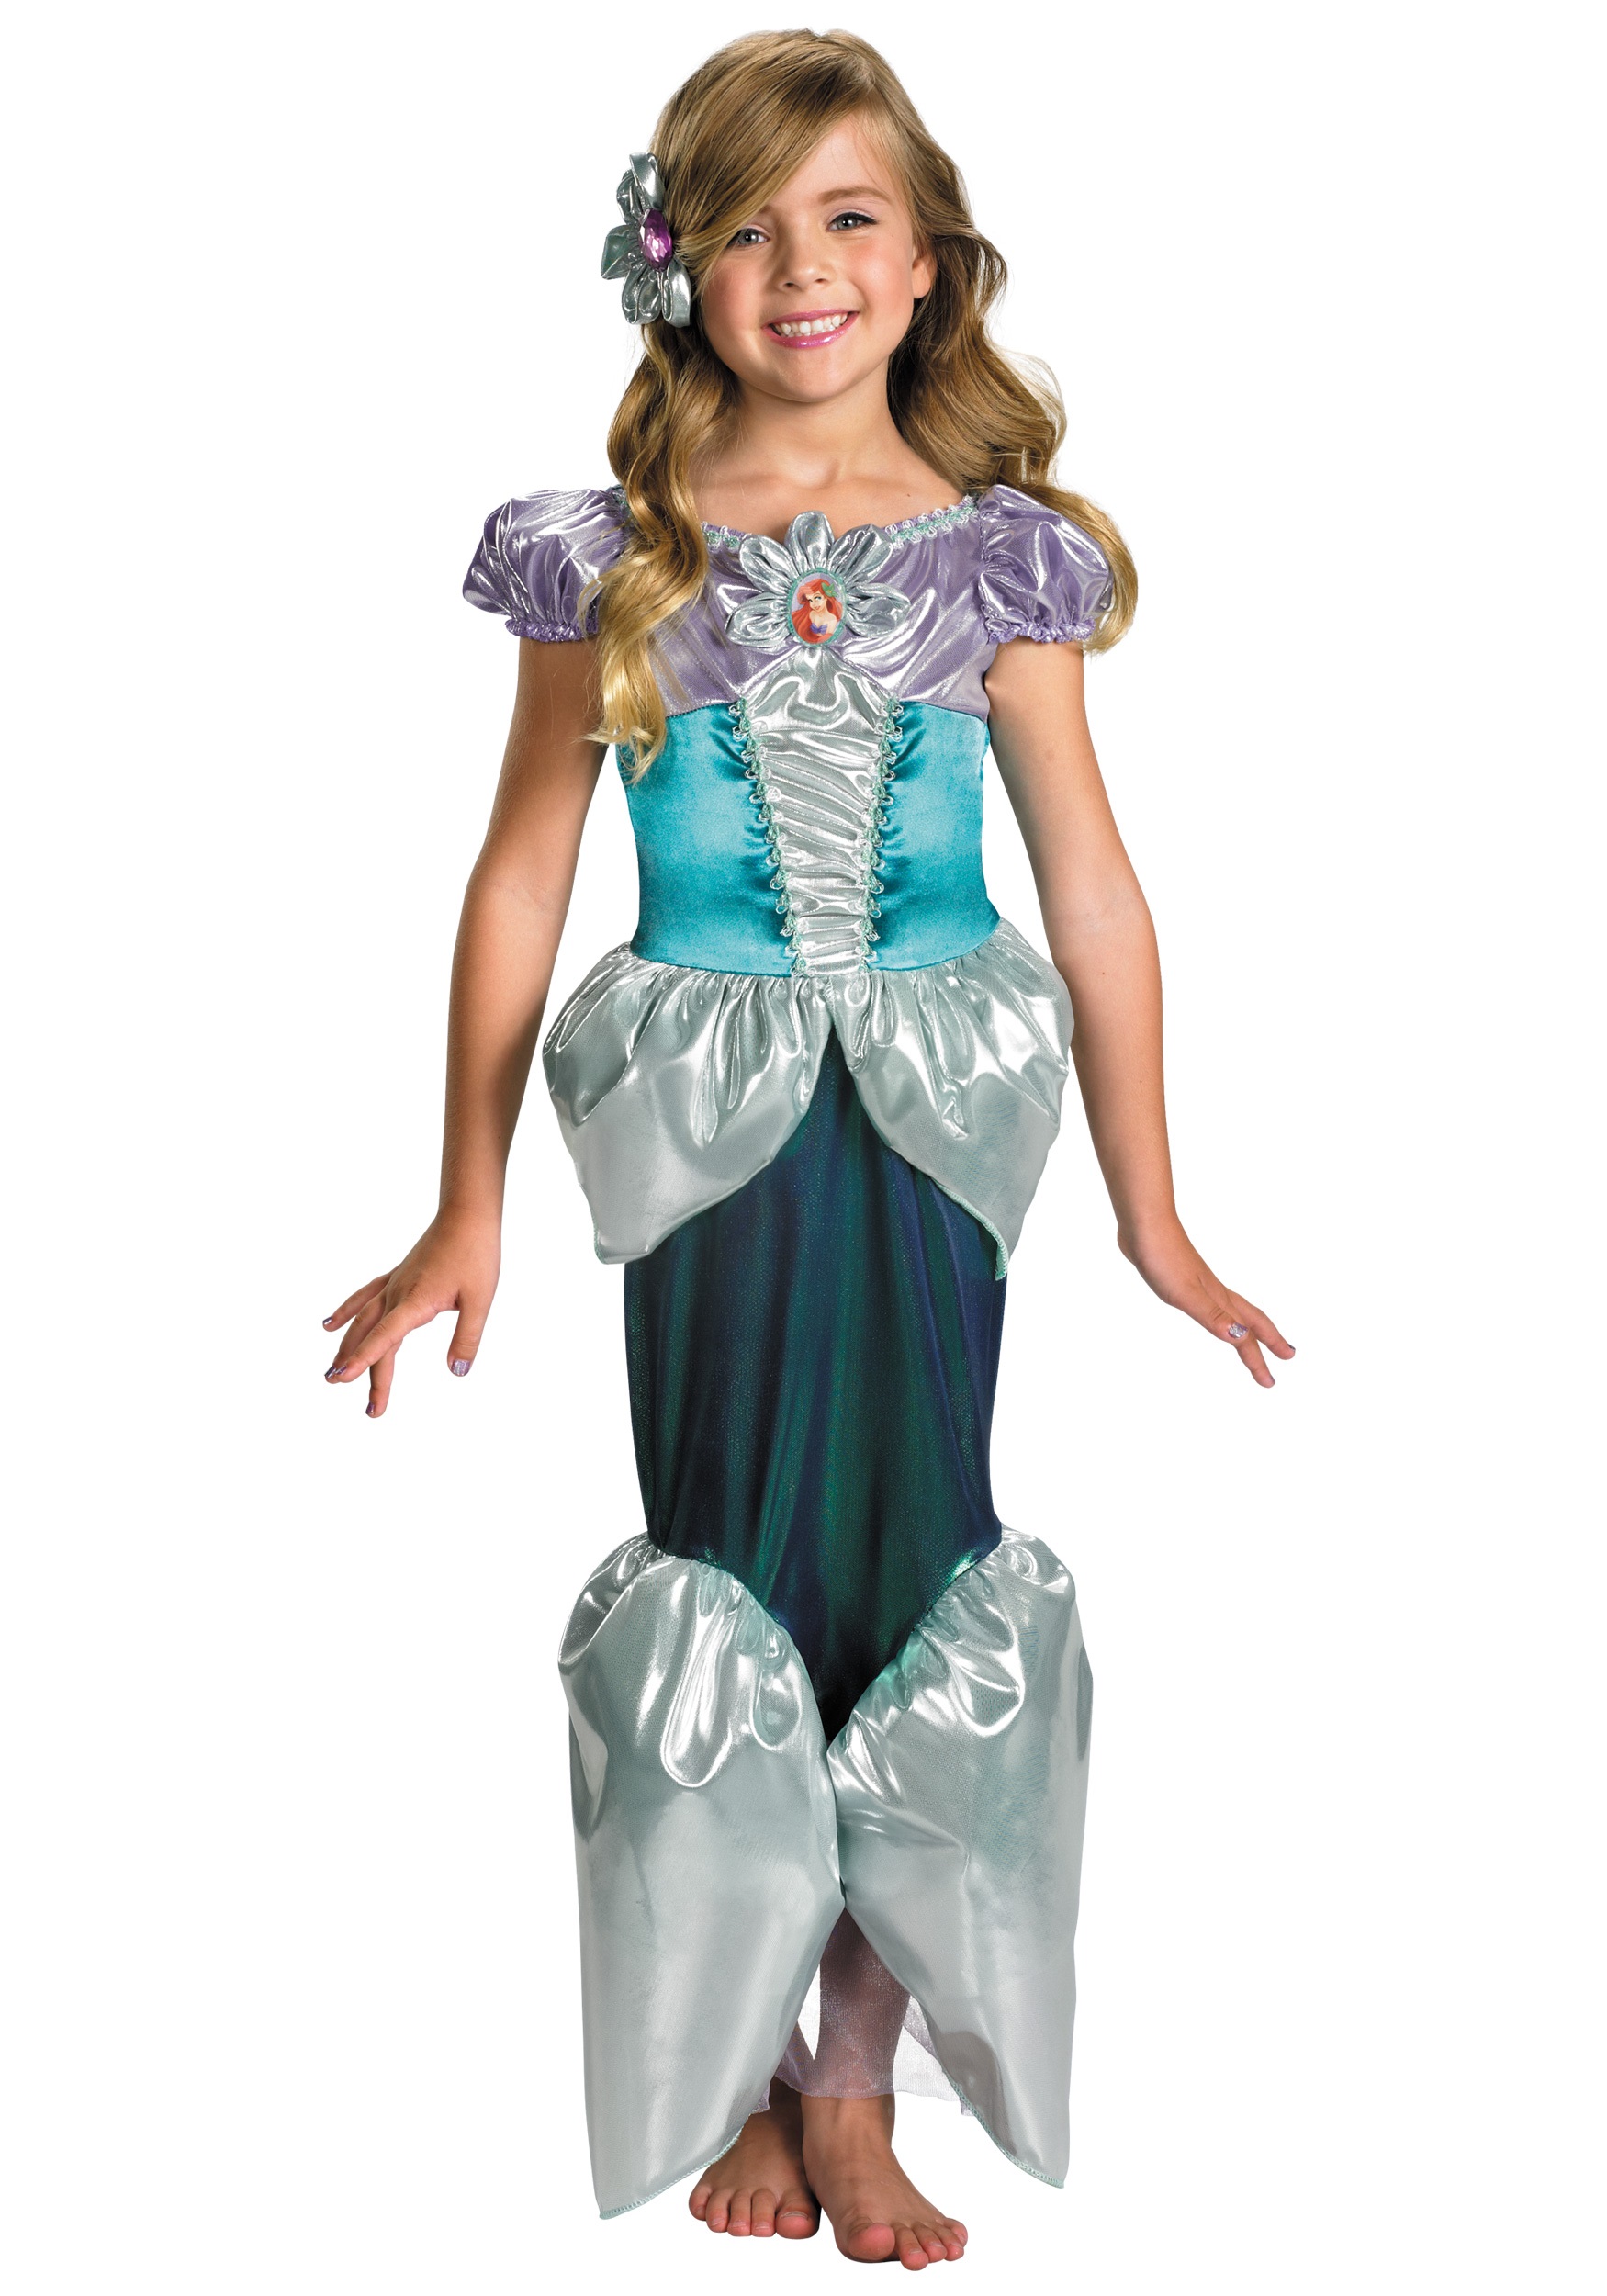 DISNEY LITTLE MERMAID DELUXE CHILD COSTUME Ariel Dress Theme Halloween Party 